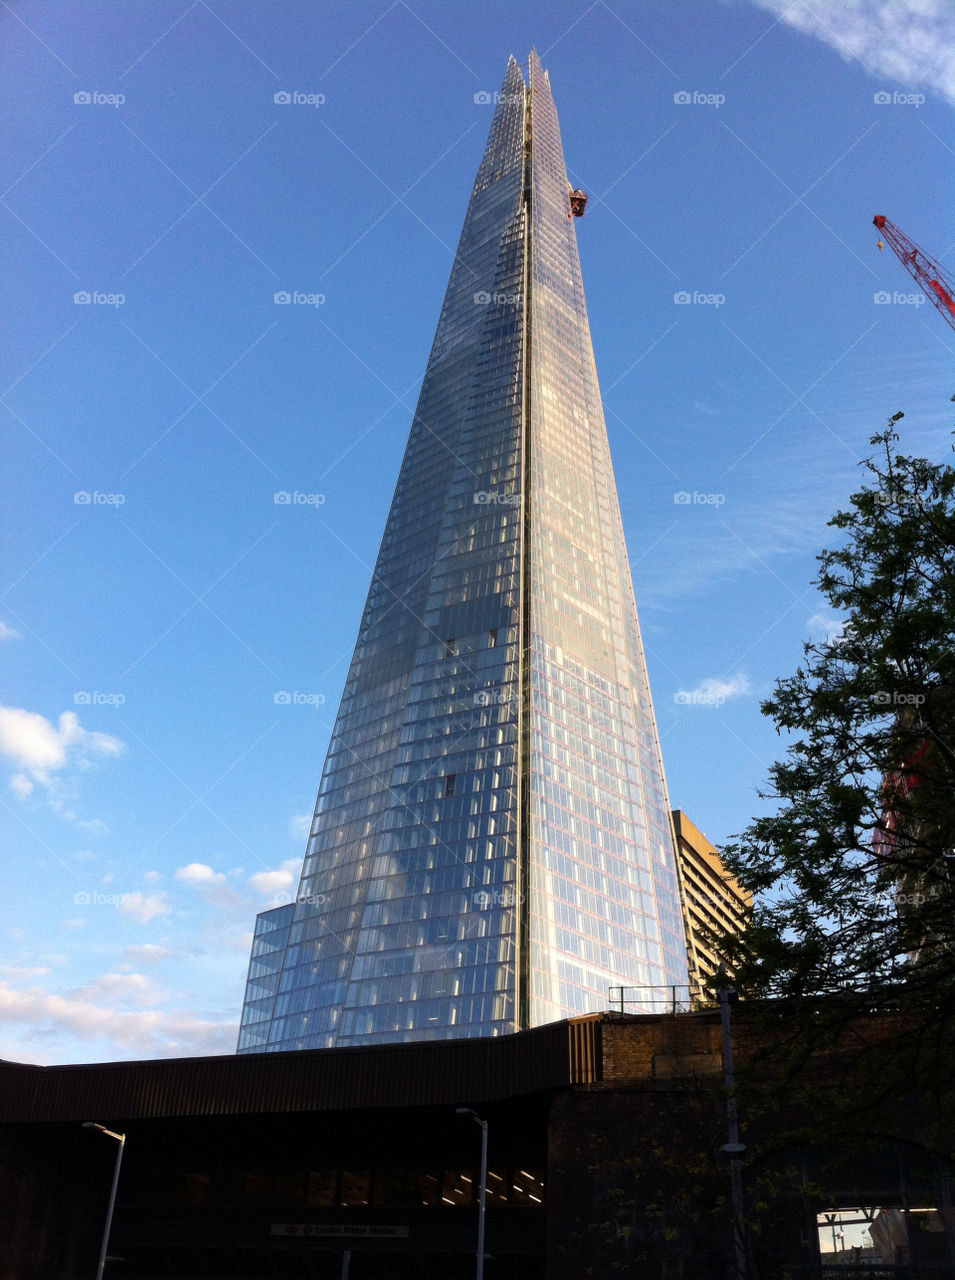 london united kingdom skyscraper building by stevied83